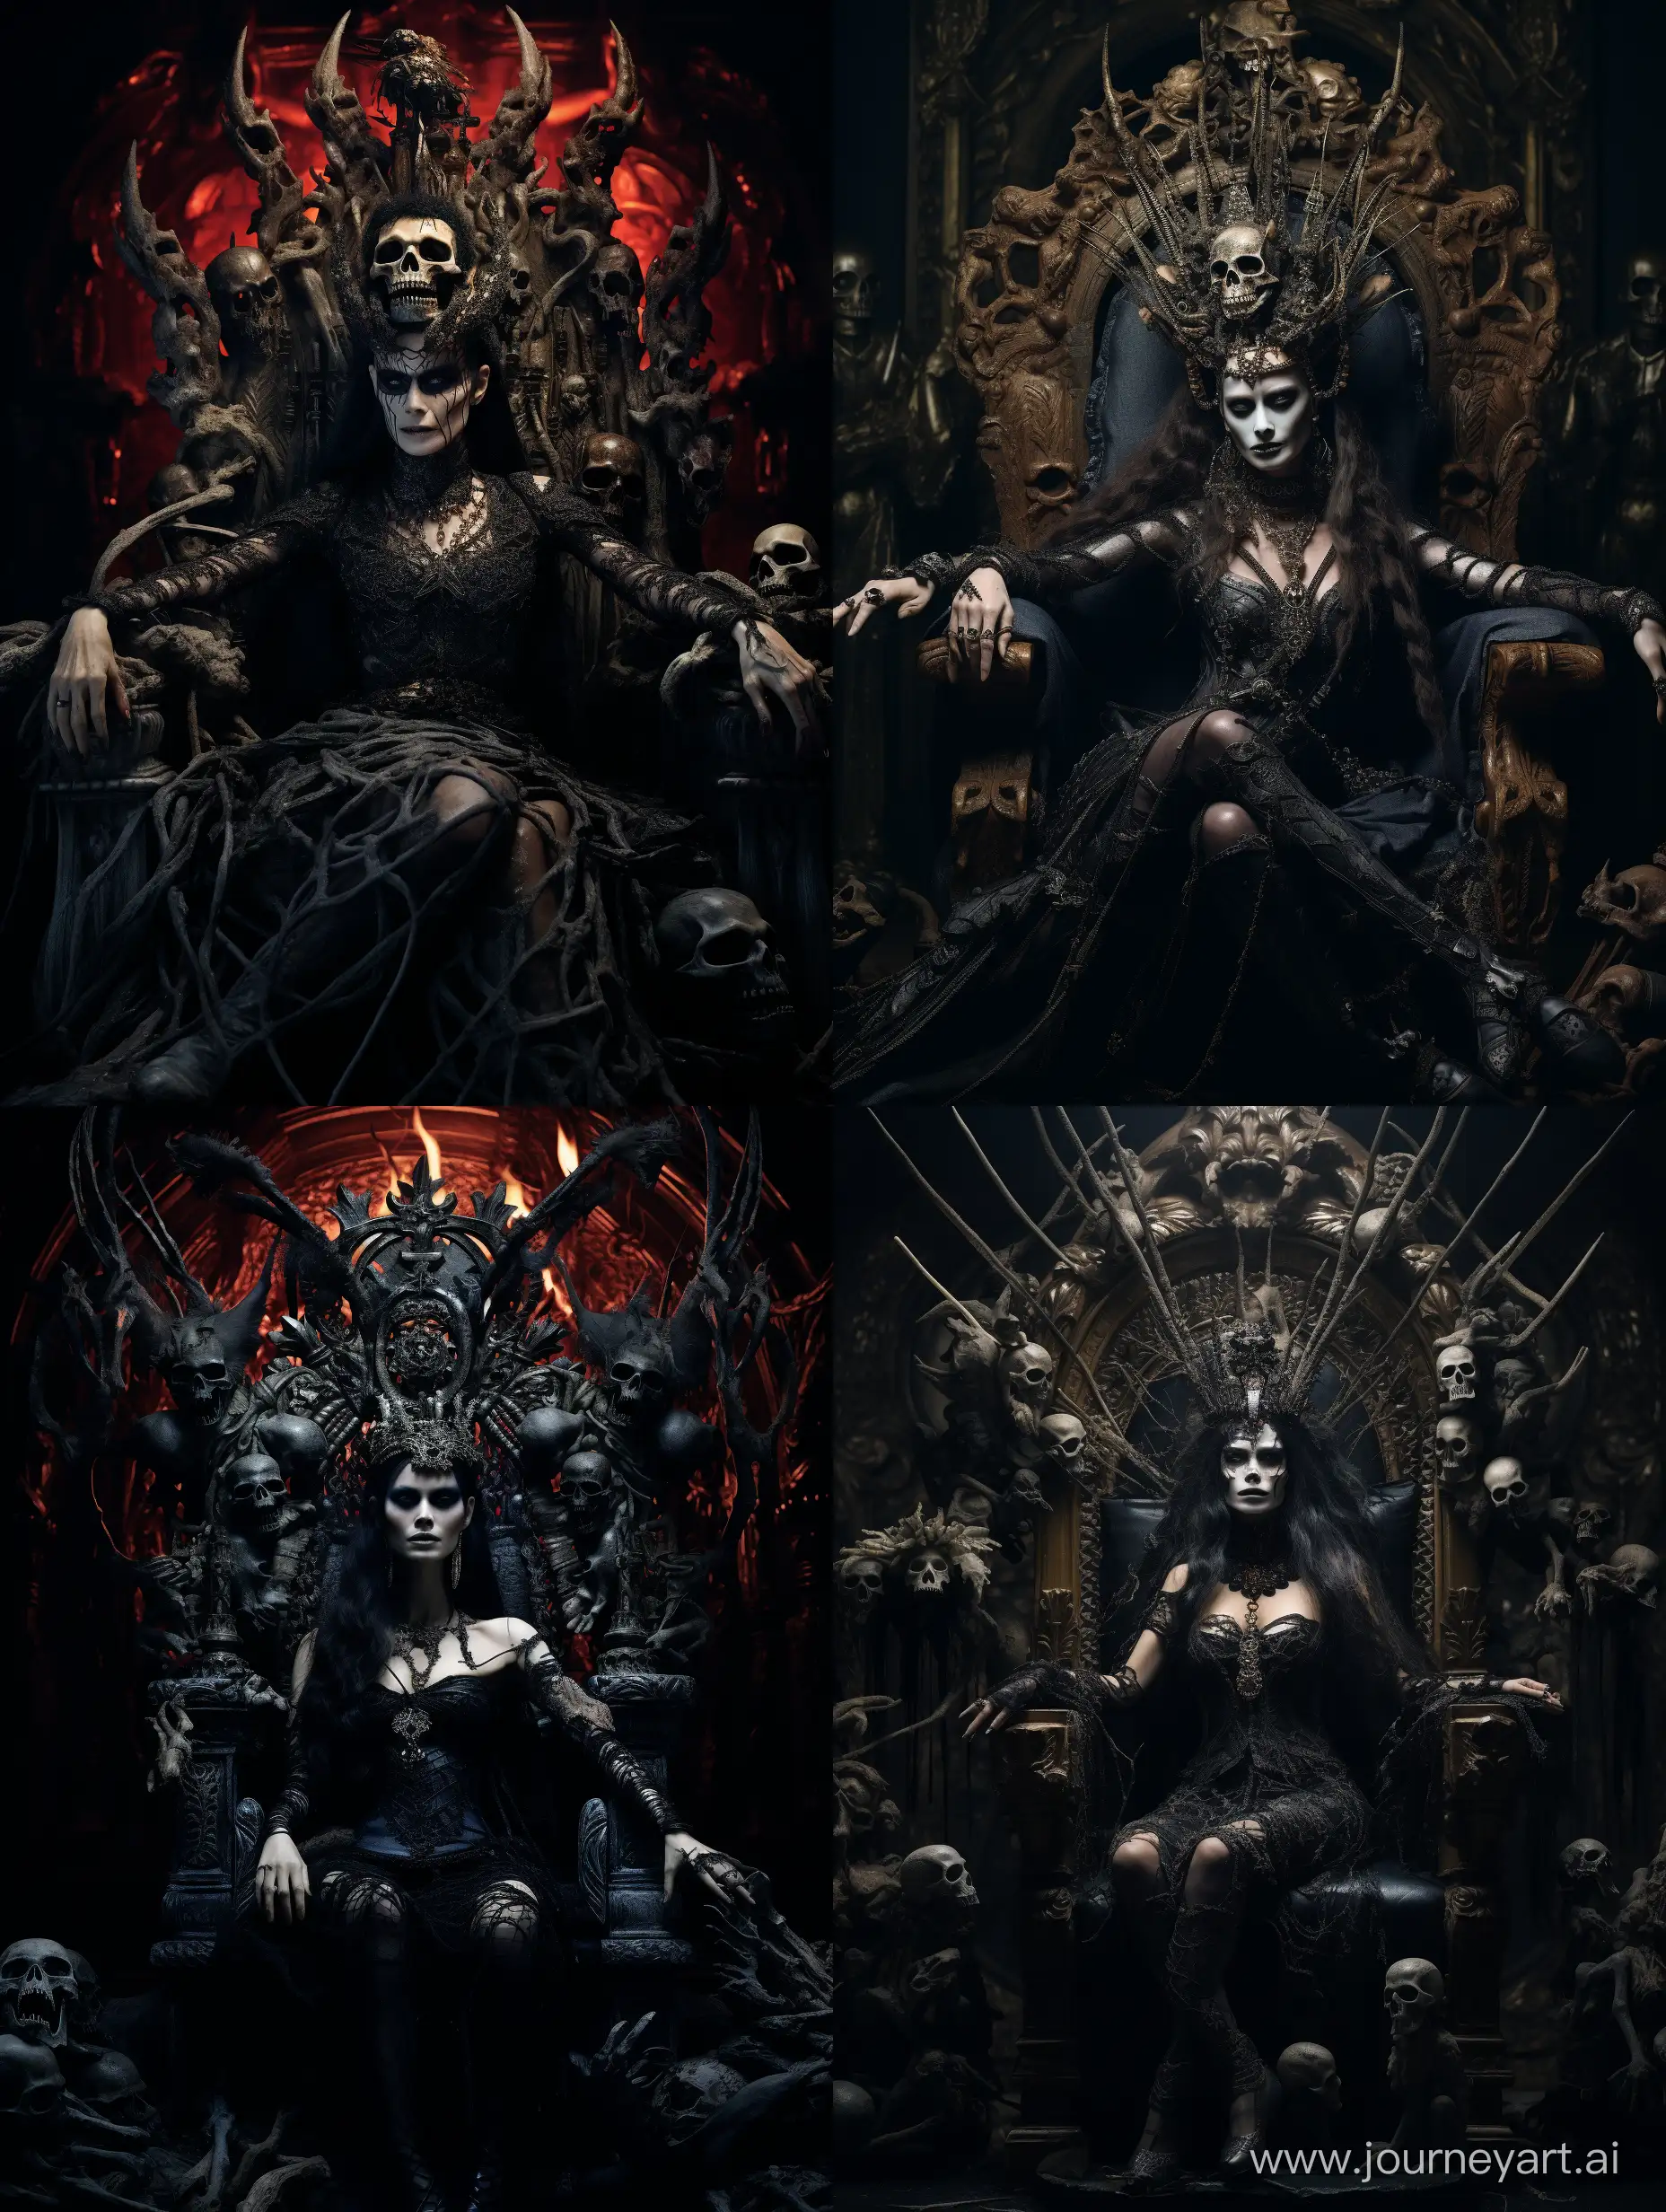 Lilith-Queen-of-the-Underworld-Macabre-Elegance-in-HighResolution